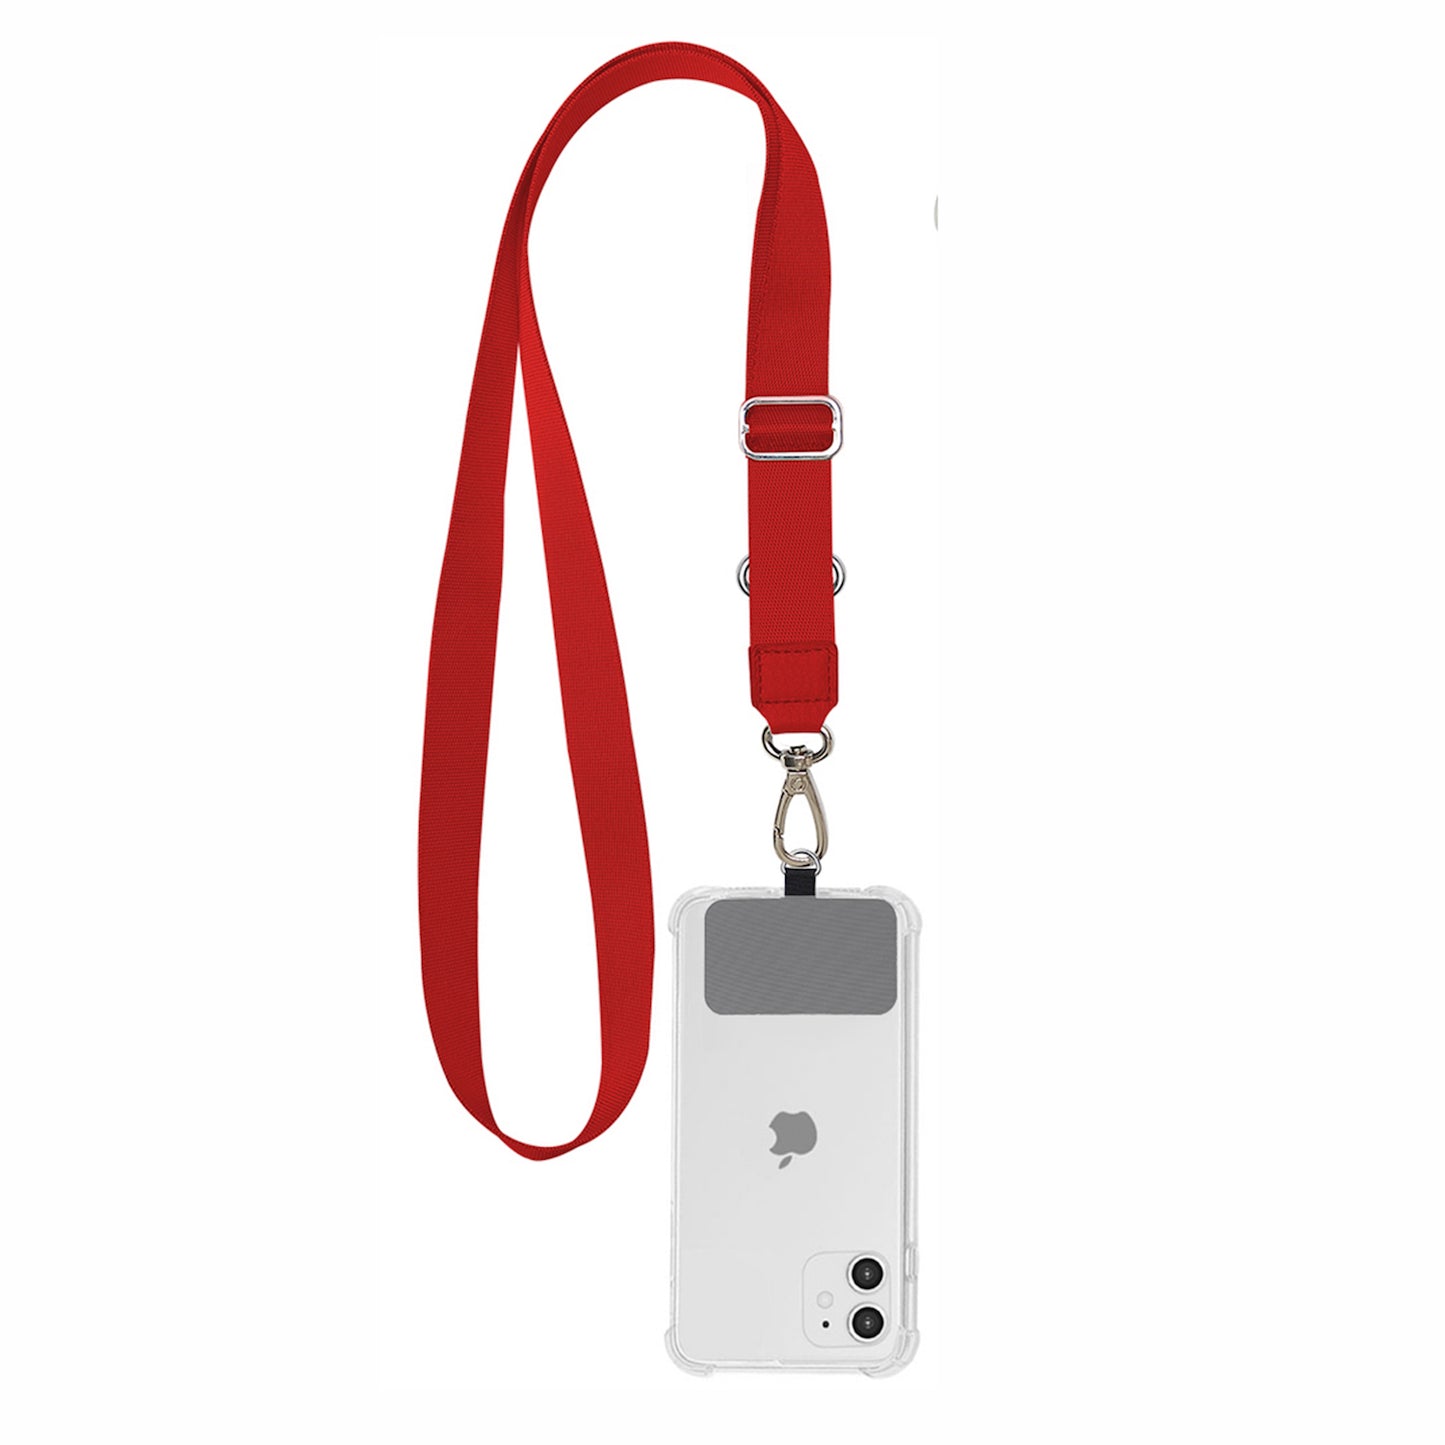 Strap para carcasa de celular universal, diseño ajustable rojo.